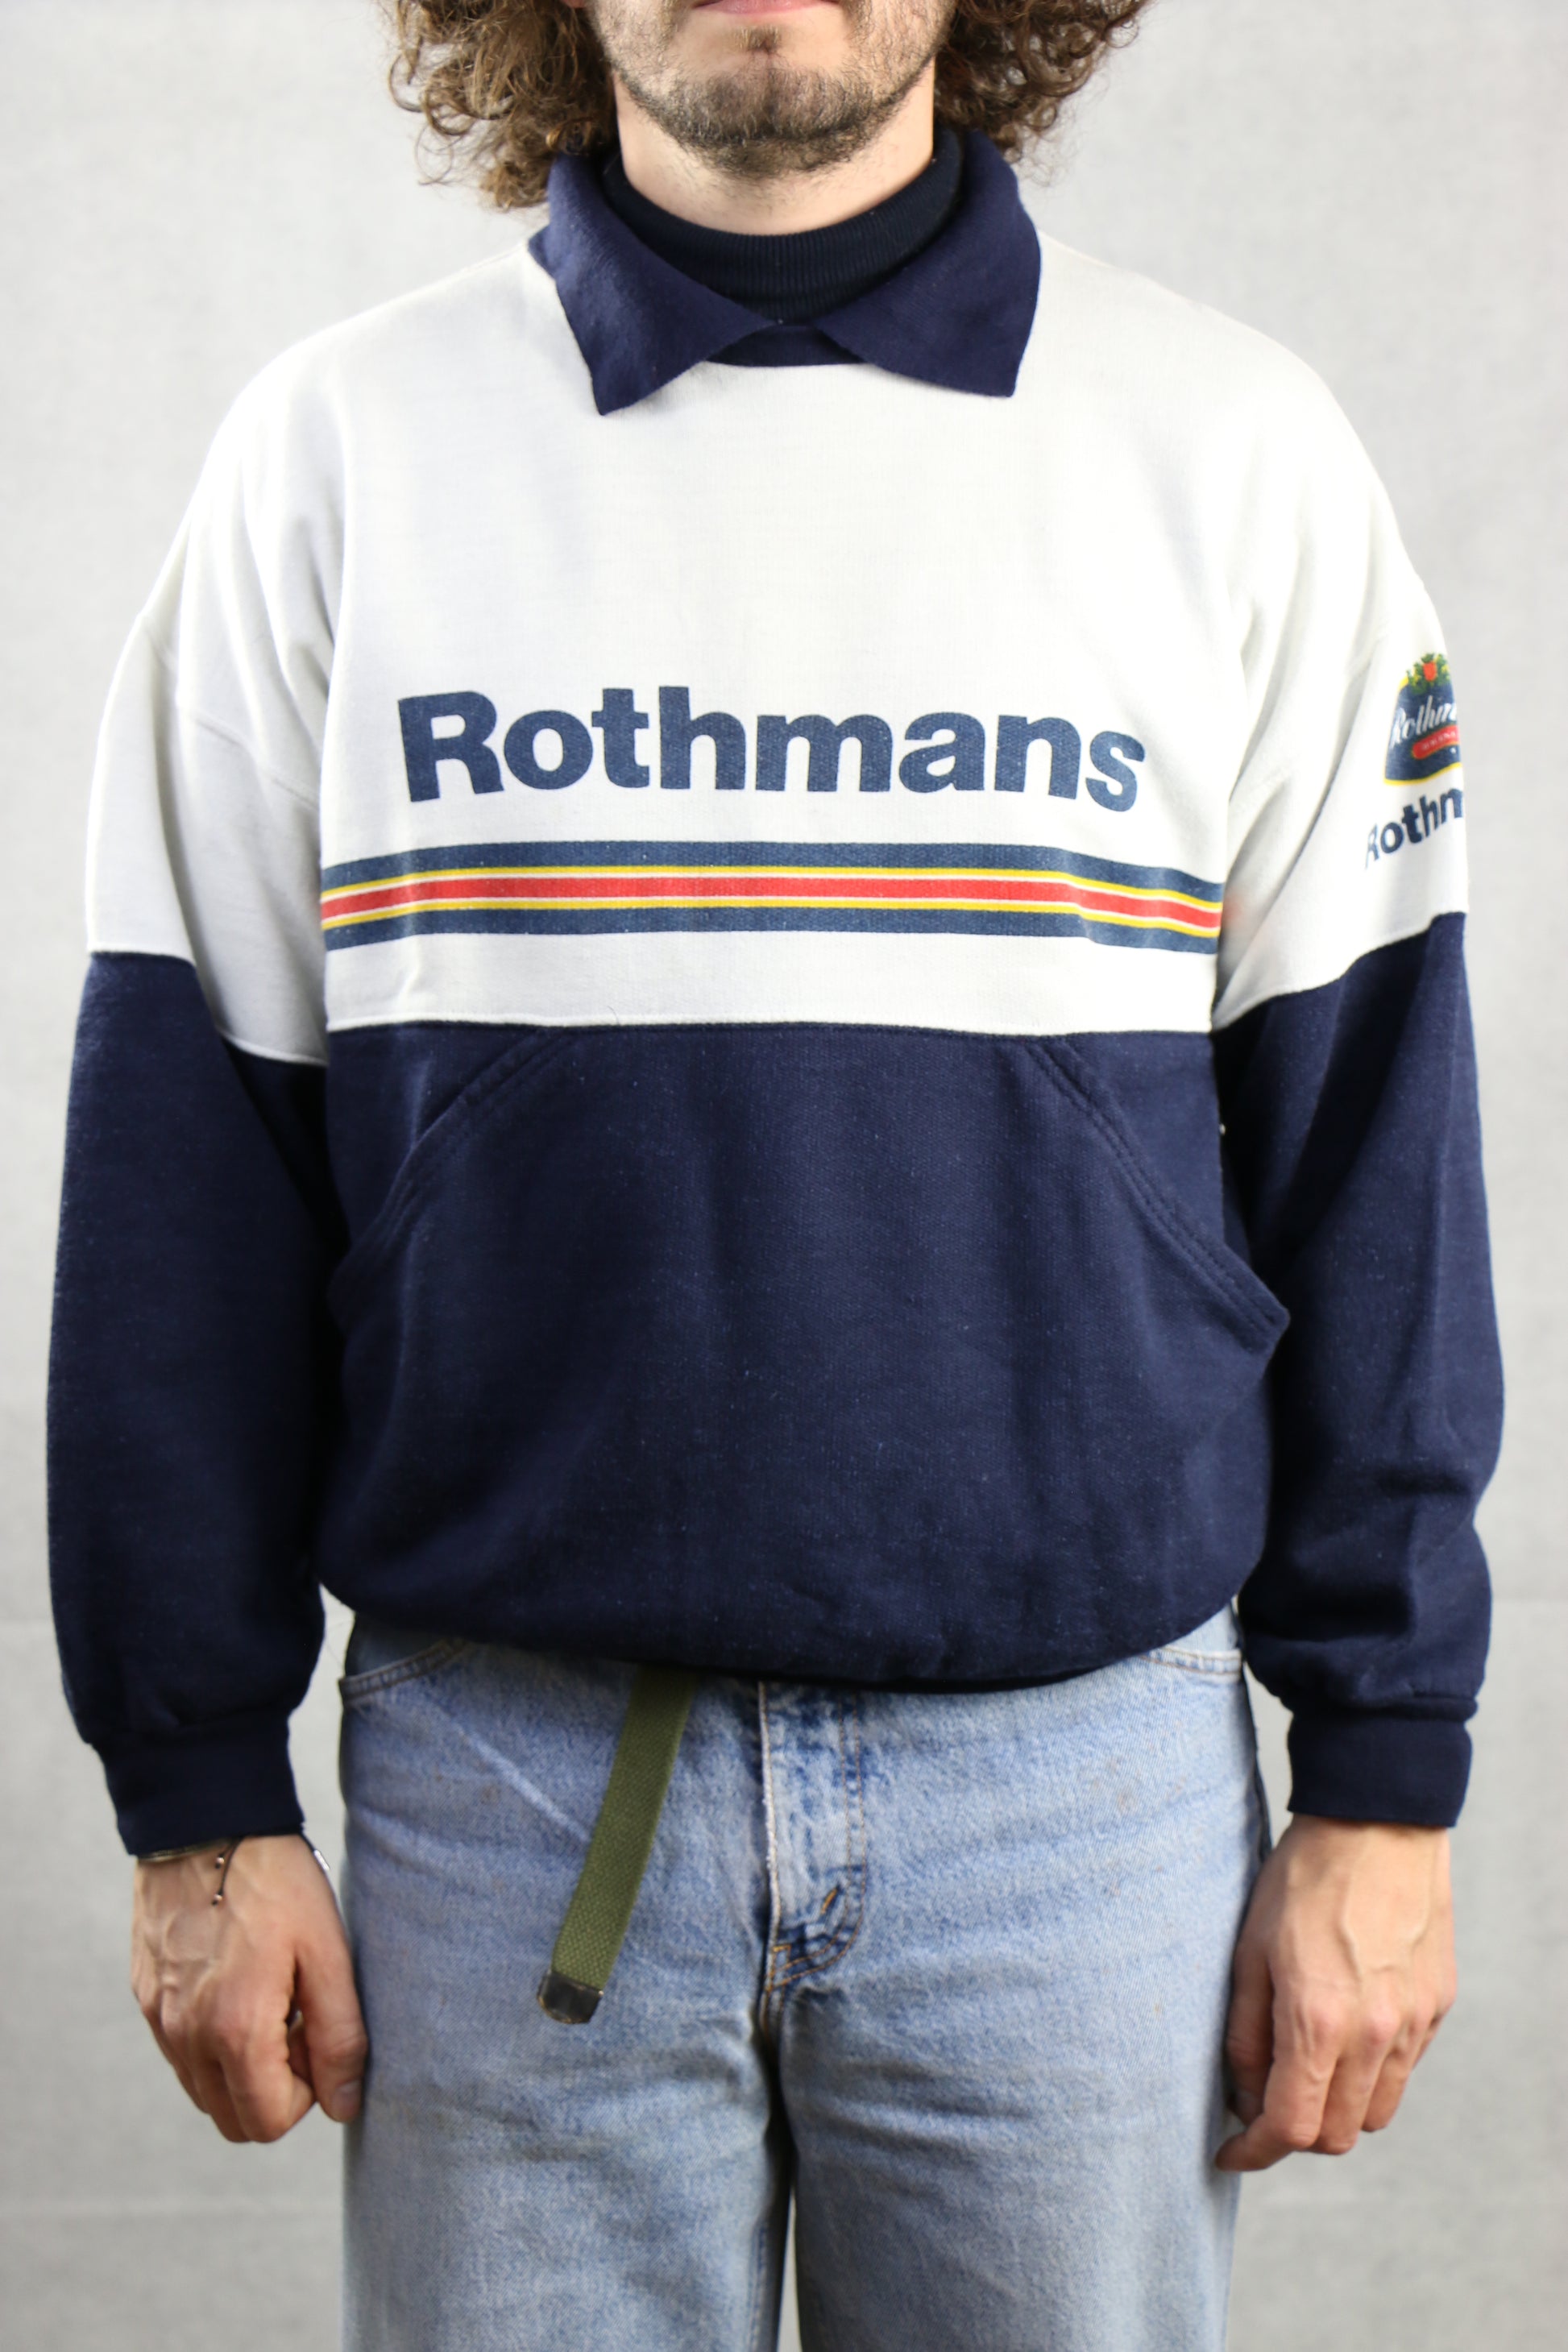 Rothmans Sweatshirt - vintage clothing clochard92.com